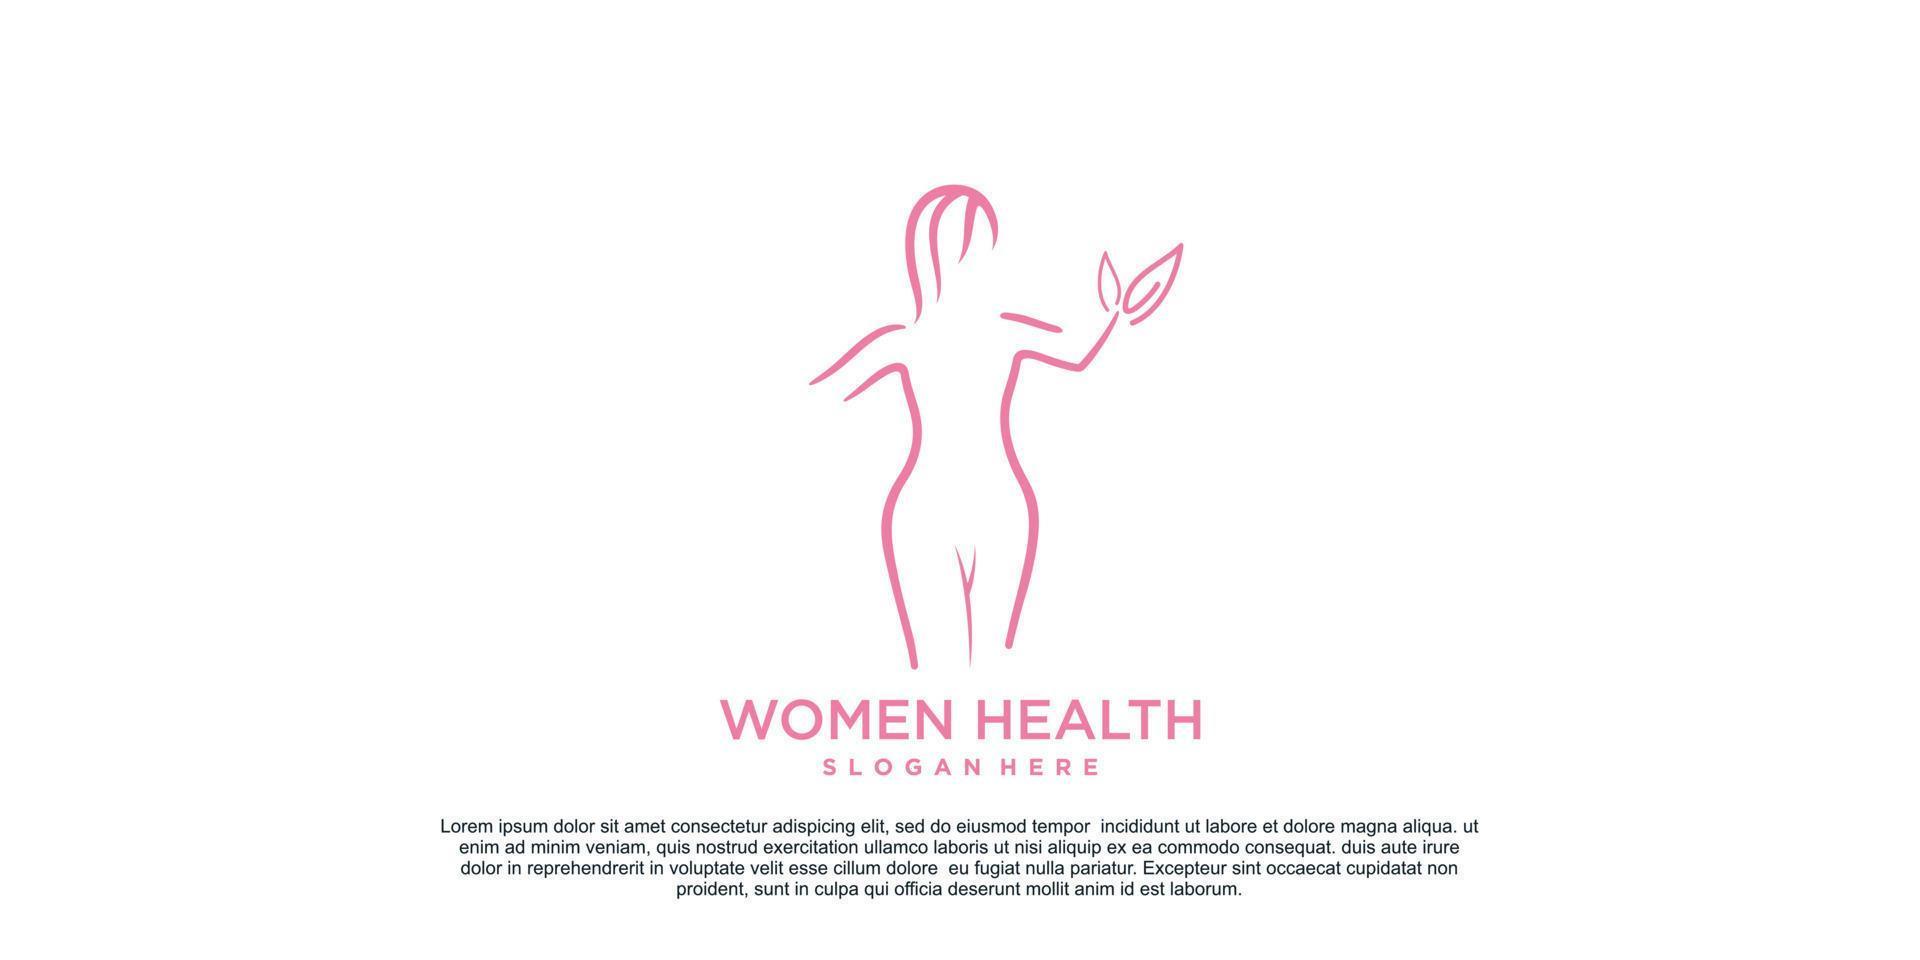 Woman health logo design and woman slim body unique concept Premium Vector Part 2